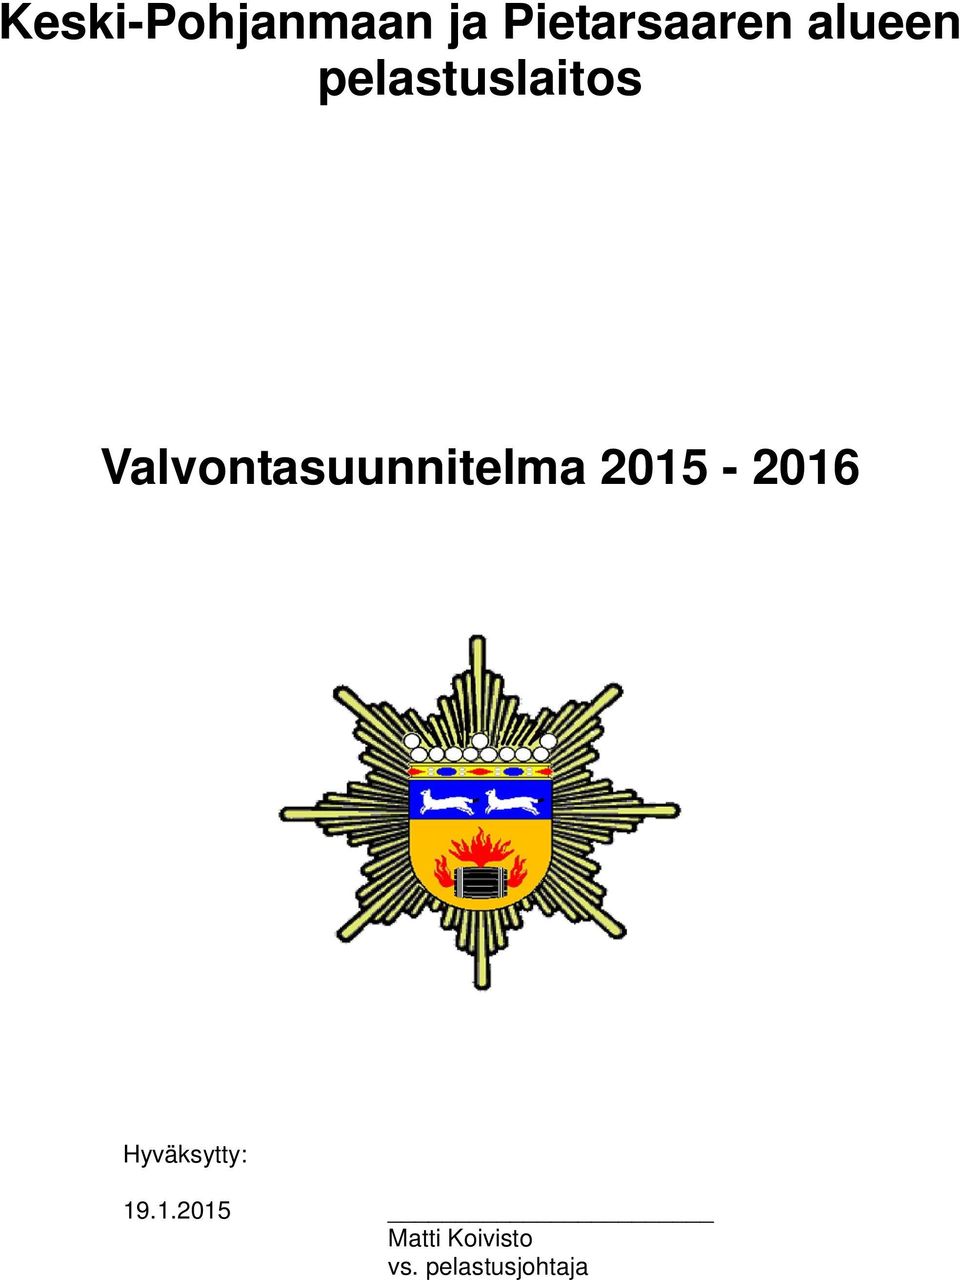 Valvontasuunnitelma 2015-2016